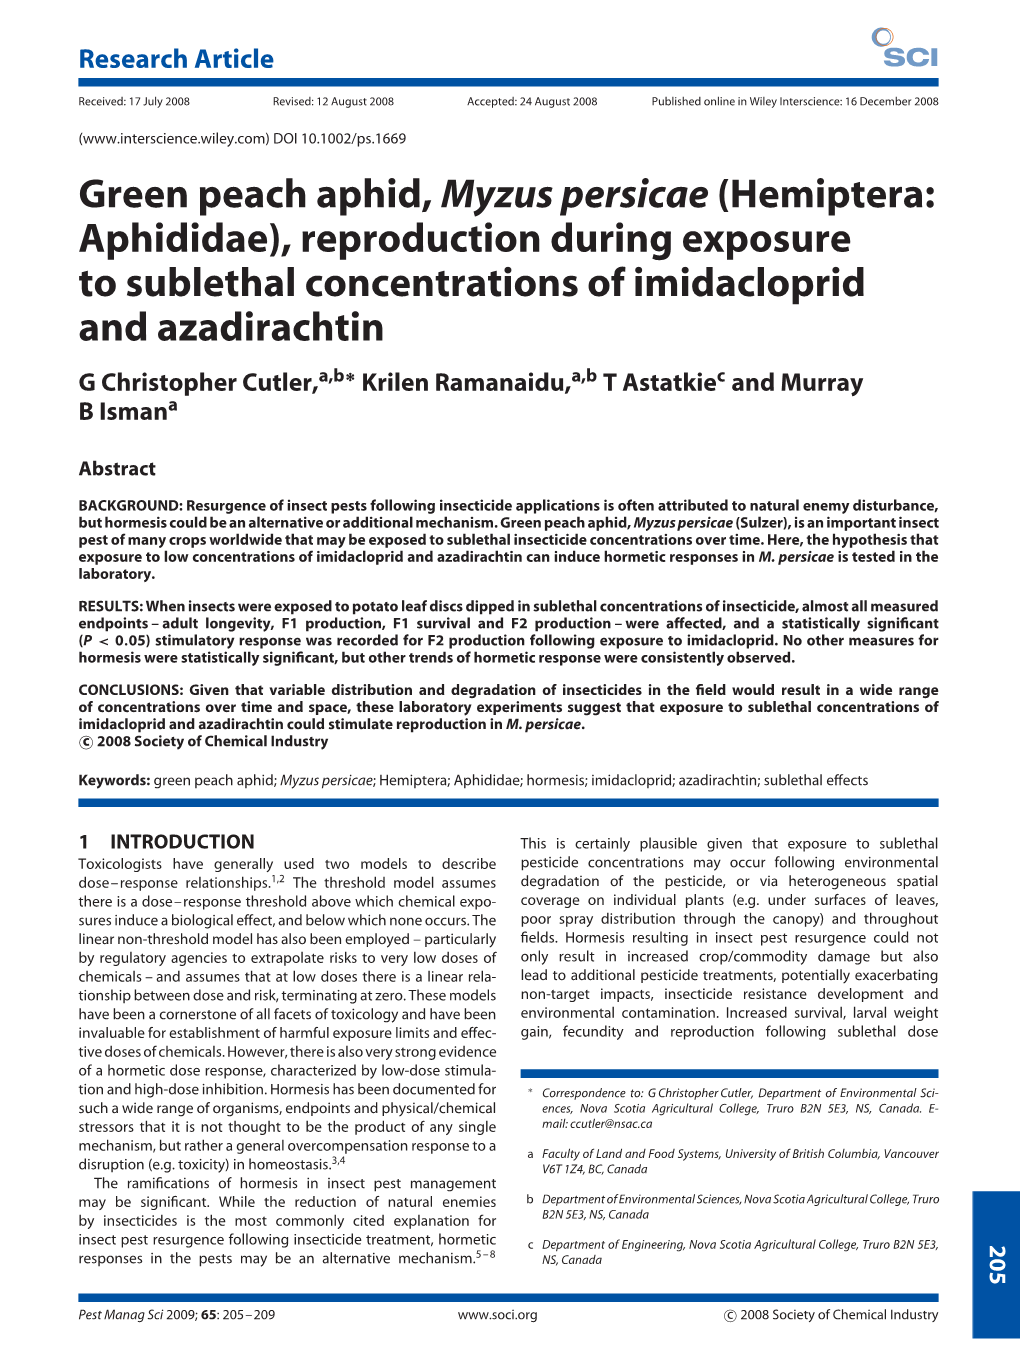 Green Peach Aphid, Myzus Persicae (Hemiptera: Aphididae)